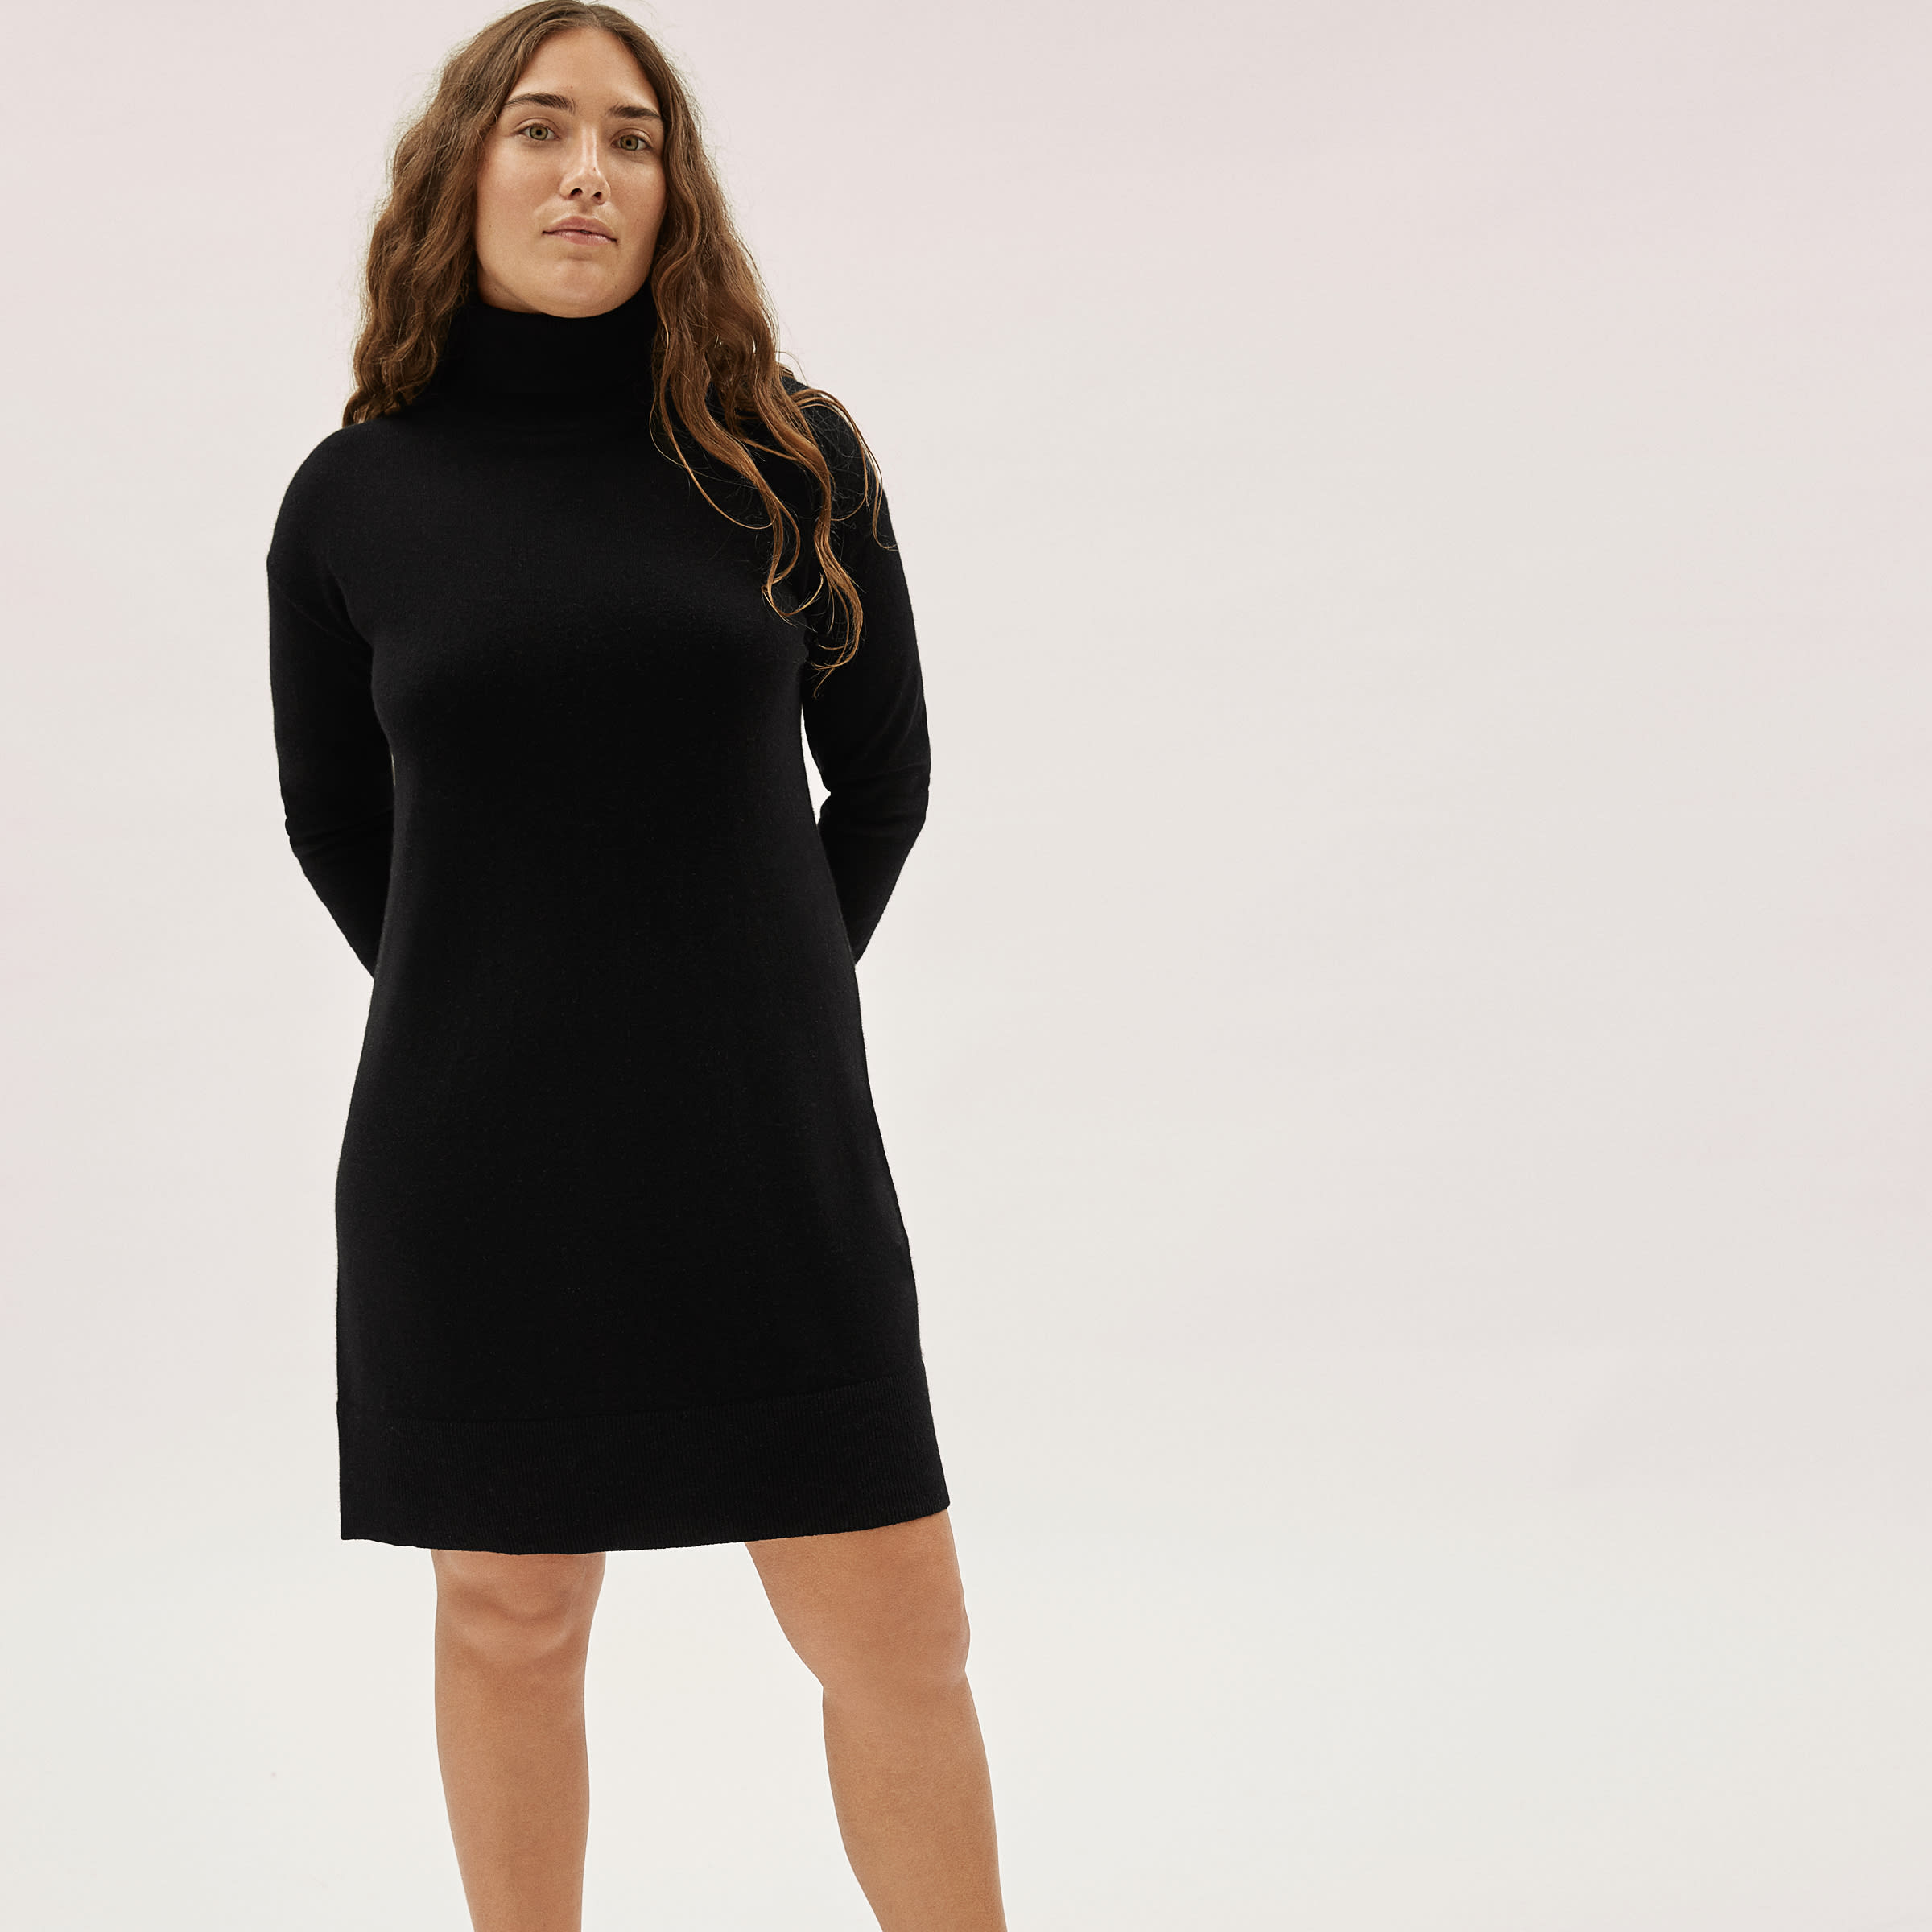 Dripping periode galning The Cashmere Turtleneck Dress Black – Everlane